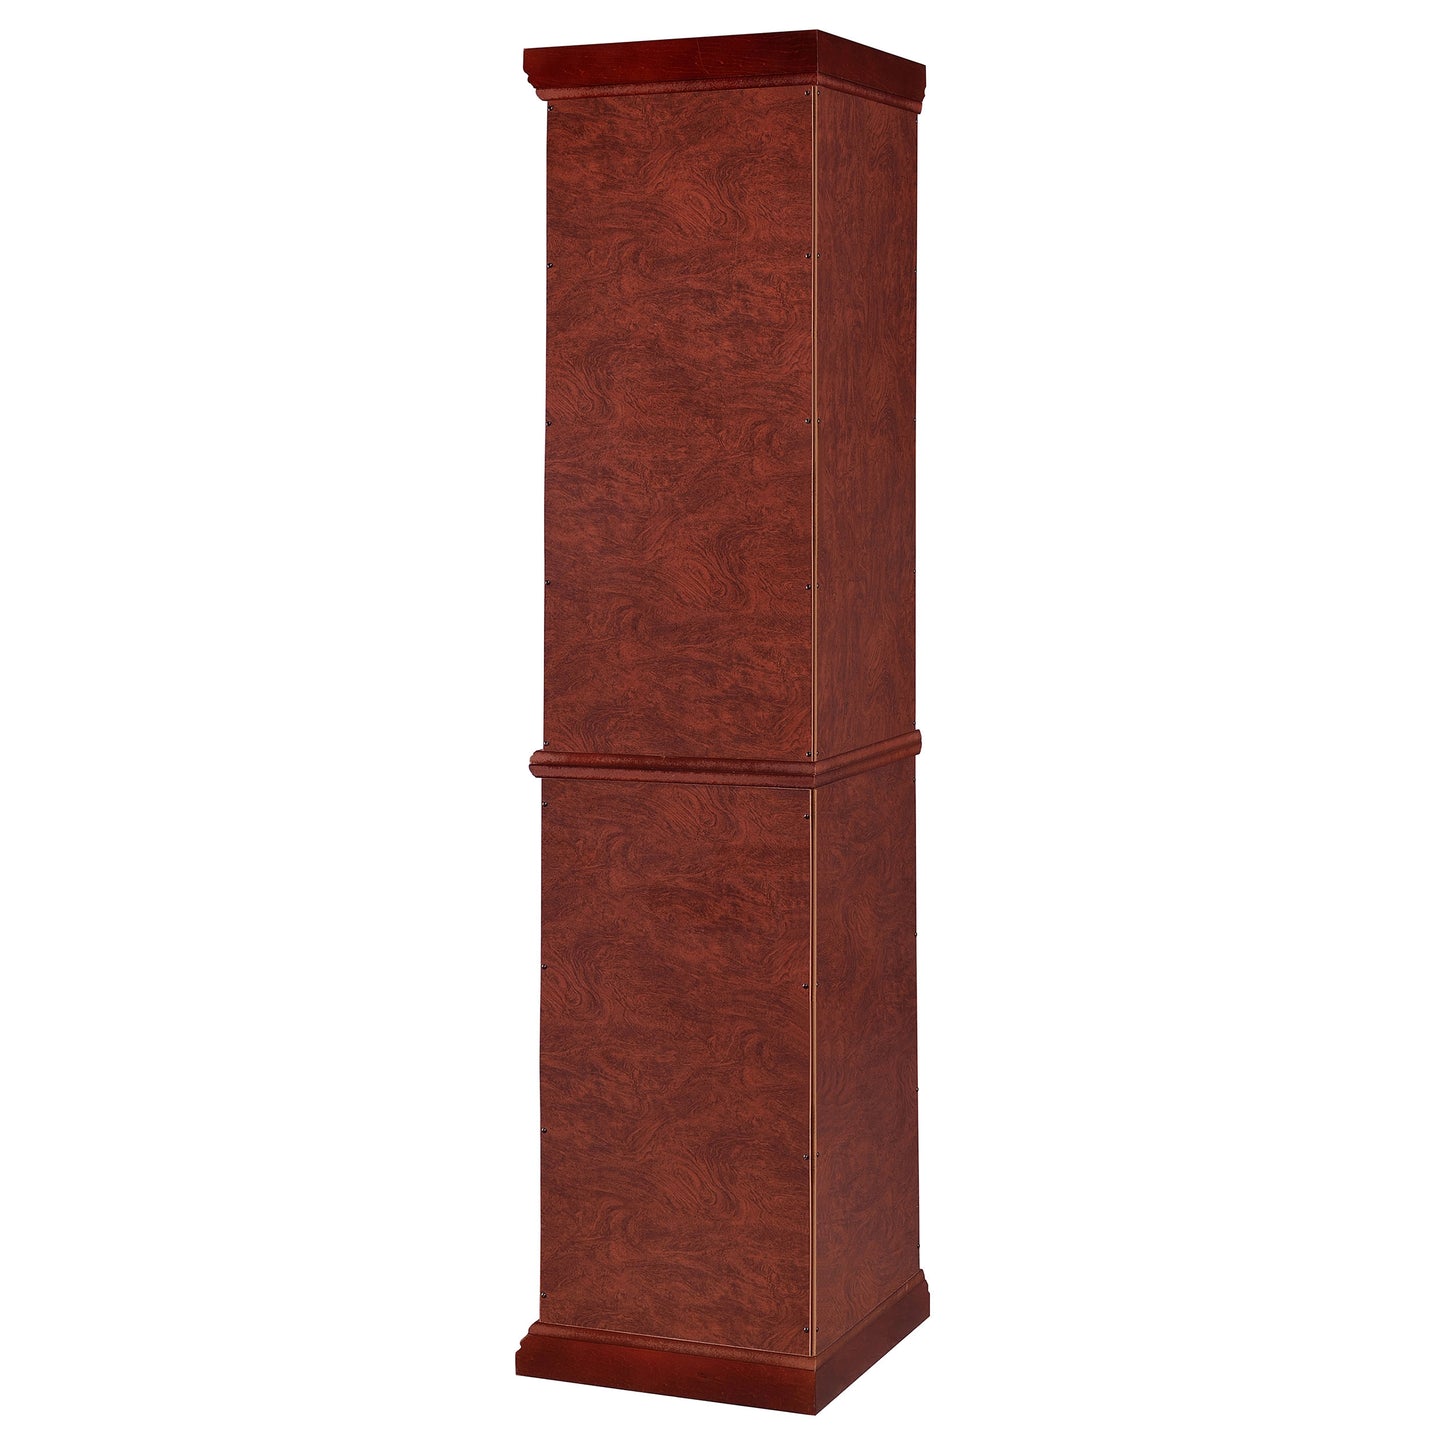 Appledale 6-shelf Corner Curio Cabinet Medium Brown